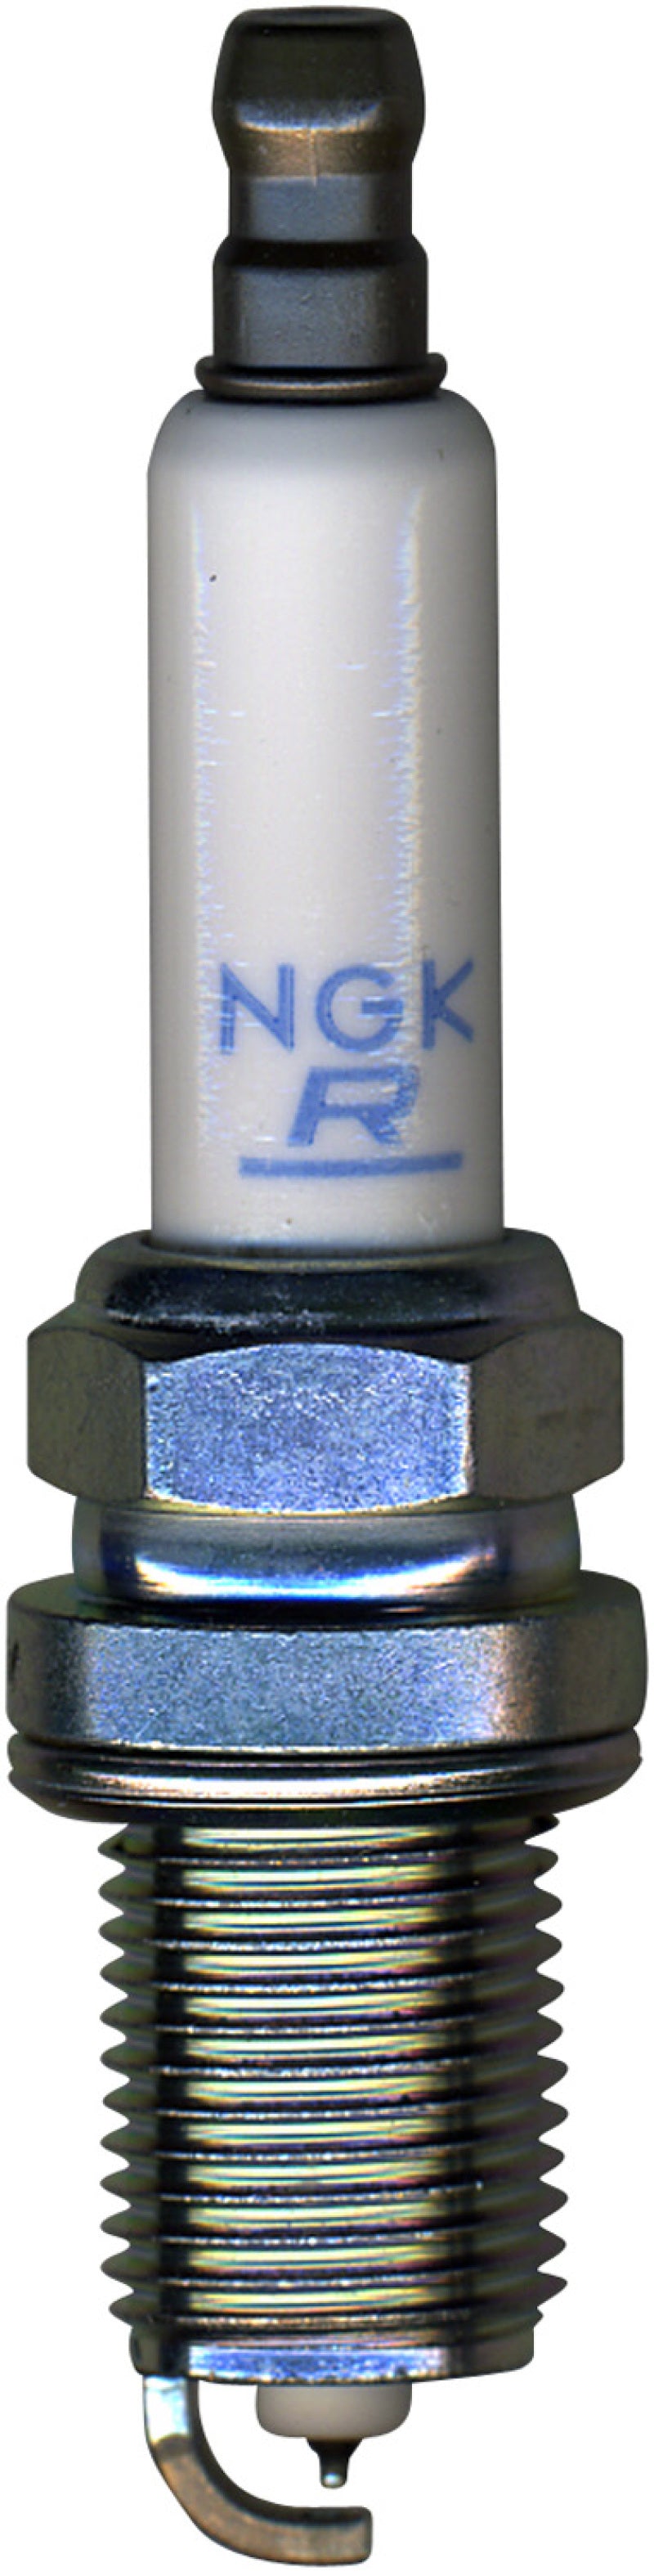 NGK Laser Platinum Spark Plug Box of 4 (PFR8S8EG).